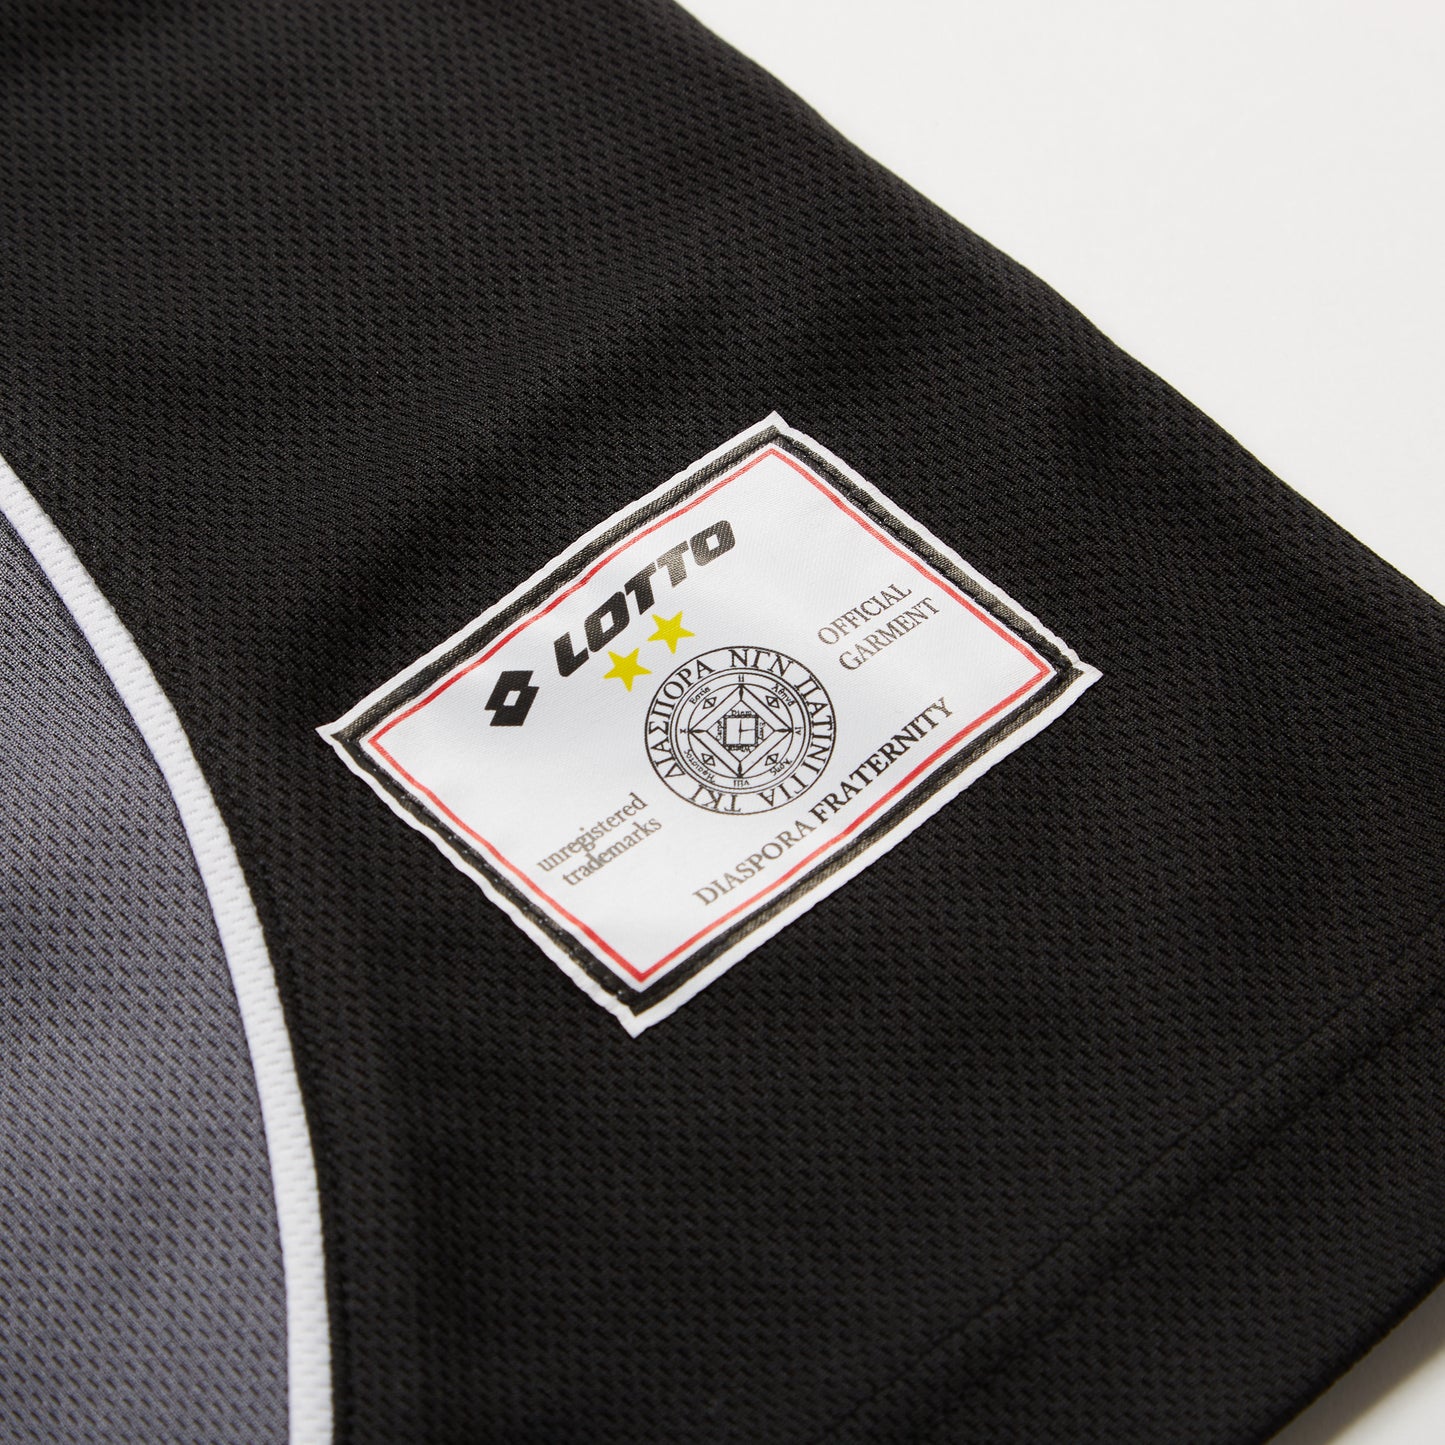 Diaspora skateboards x LOTTOコラボ/Lotto Scudetto Shirt(Grey Black)